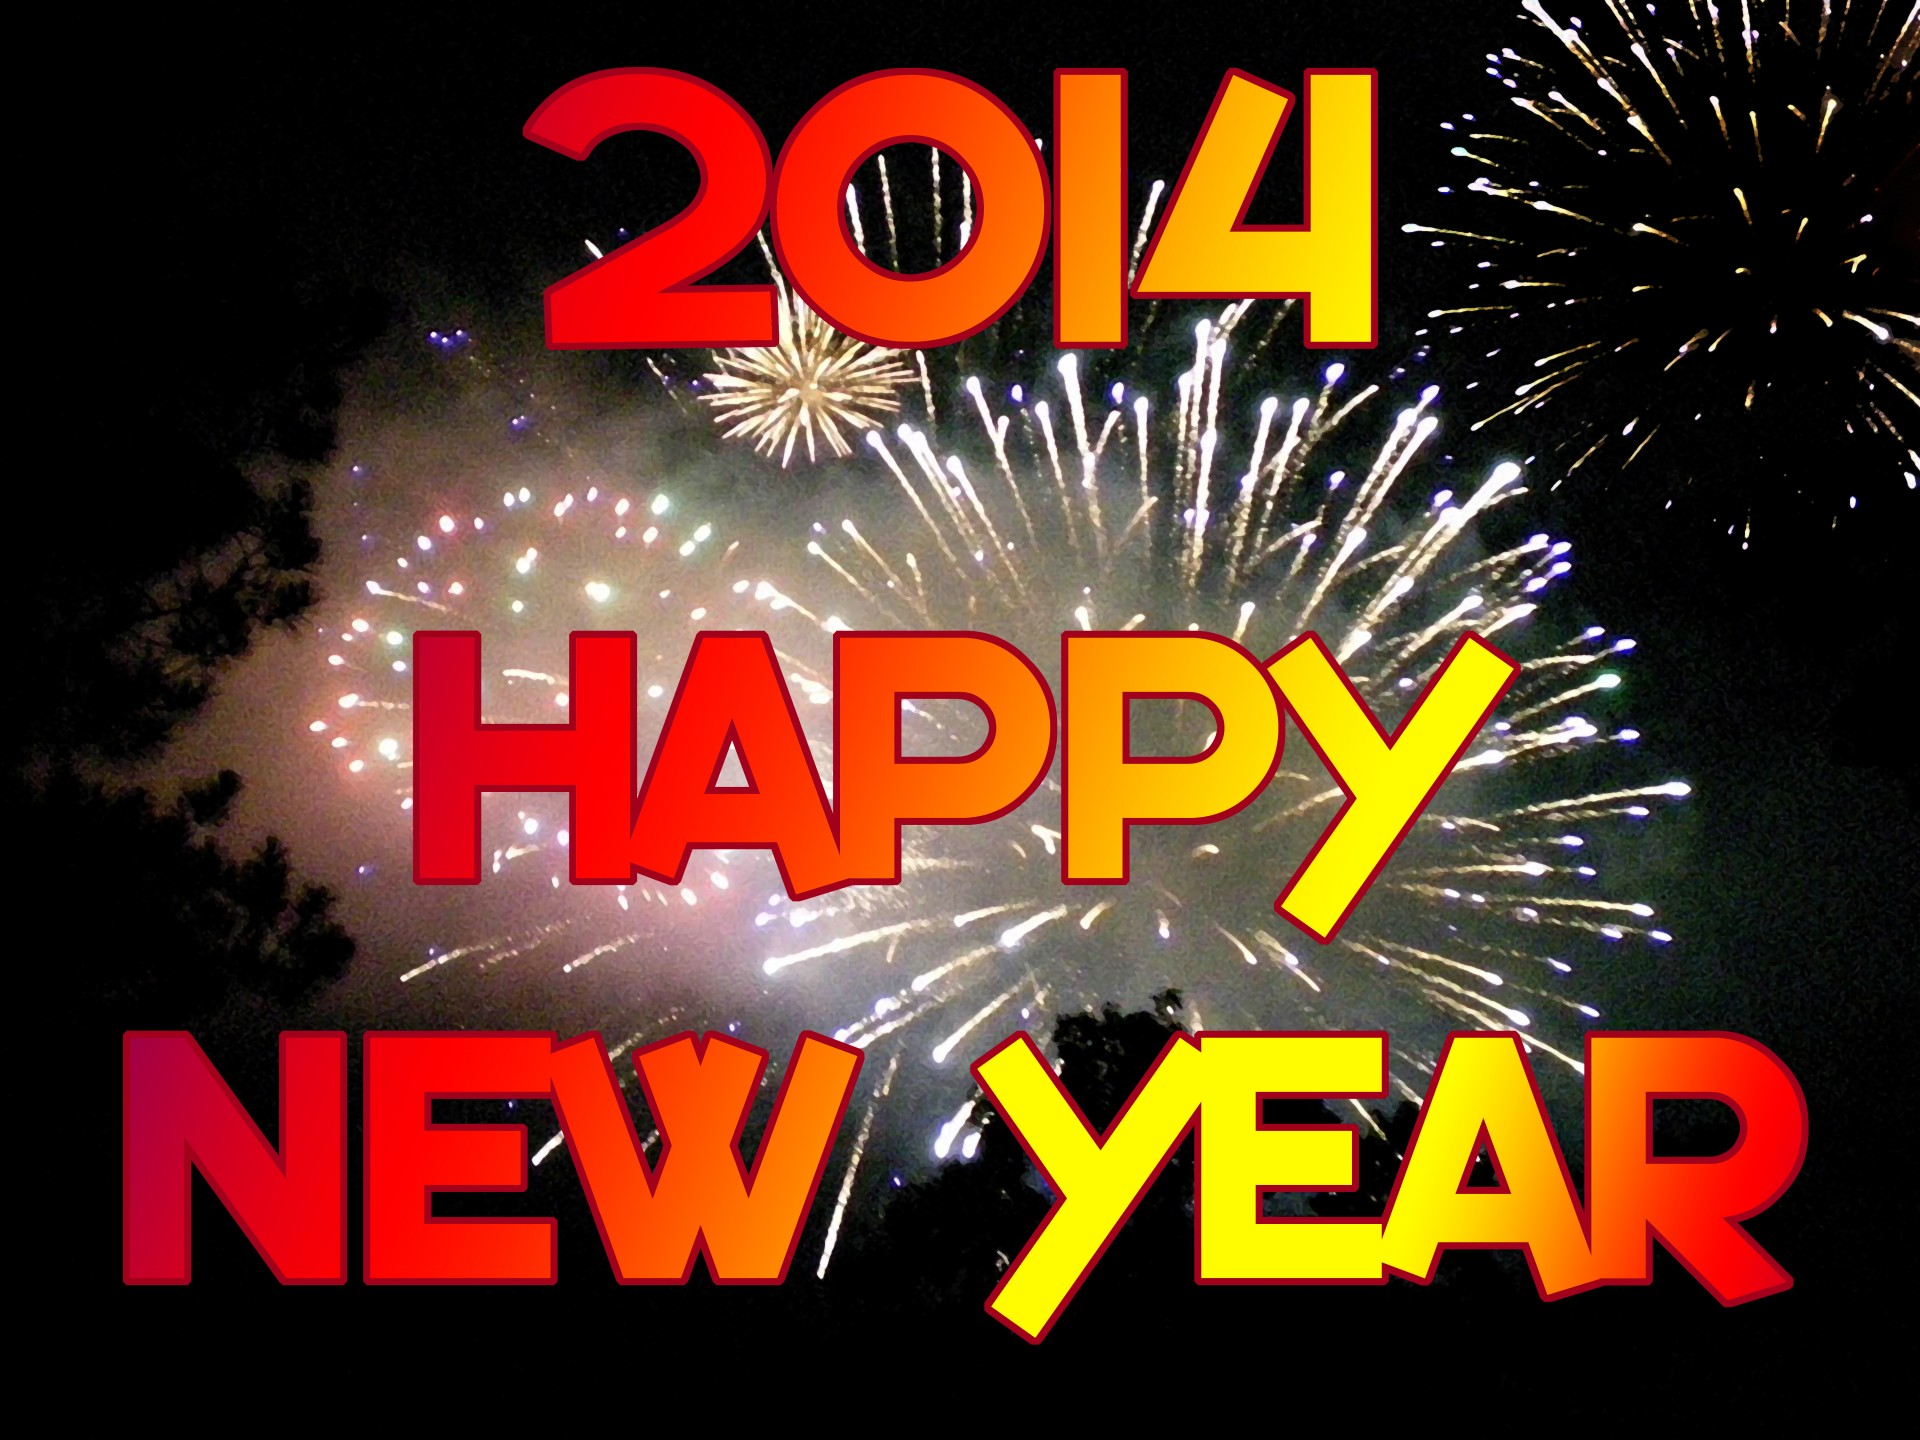 2014 happy new year fireworks free photo